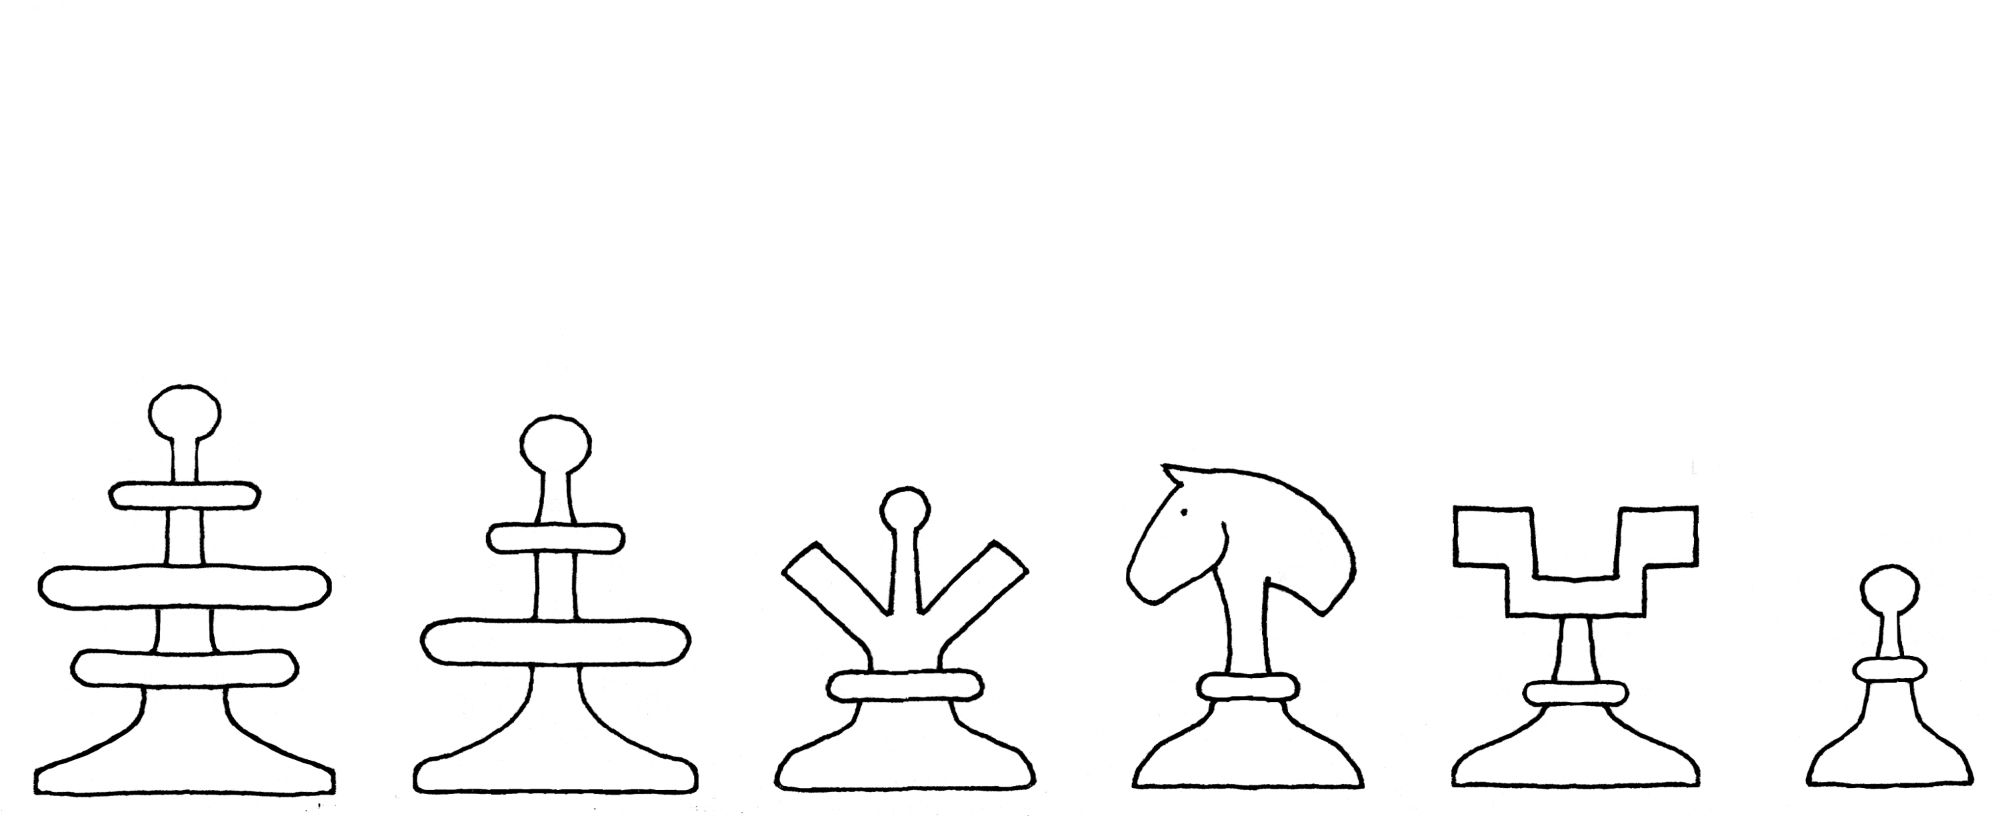 Damiano chess set interpretive diagram